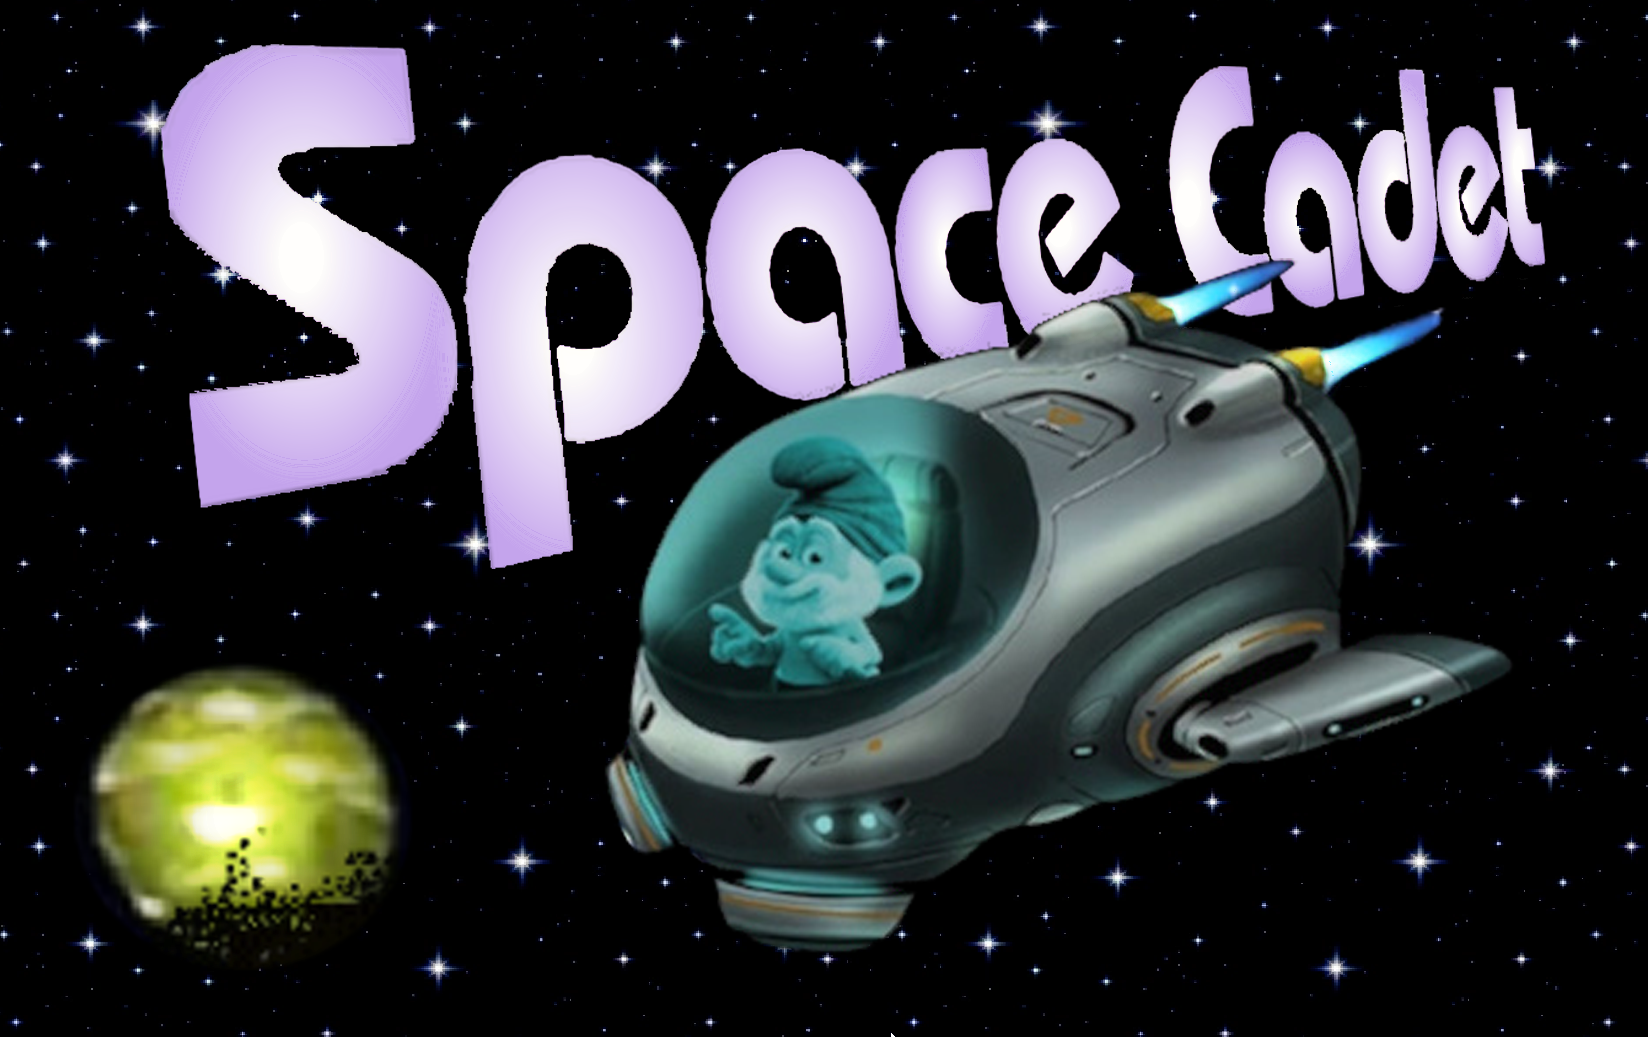 JP's Space Cadet 1.0